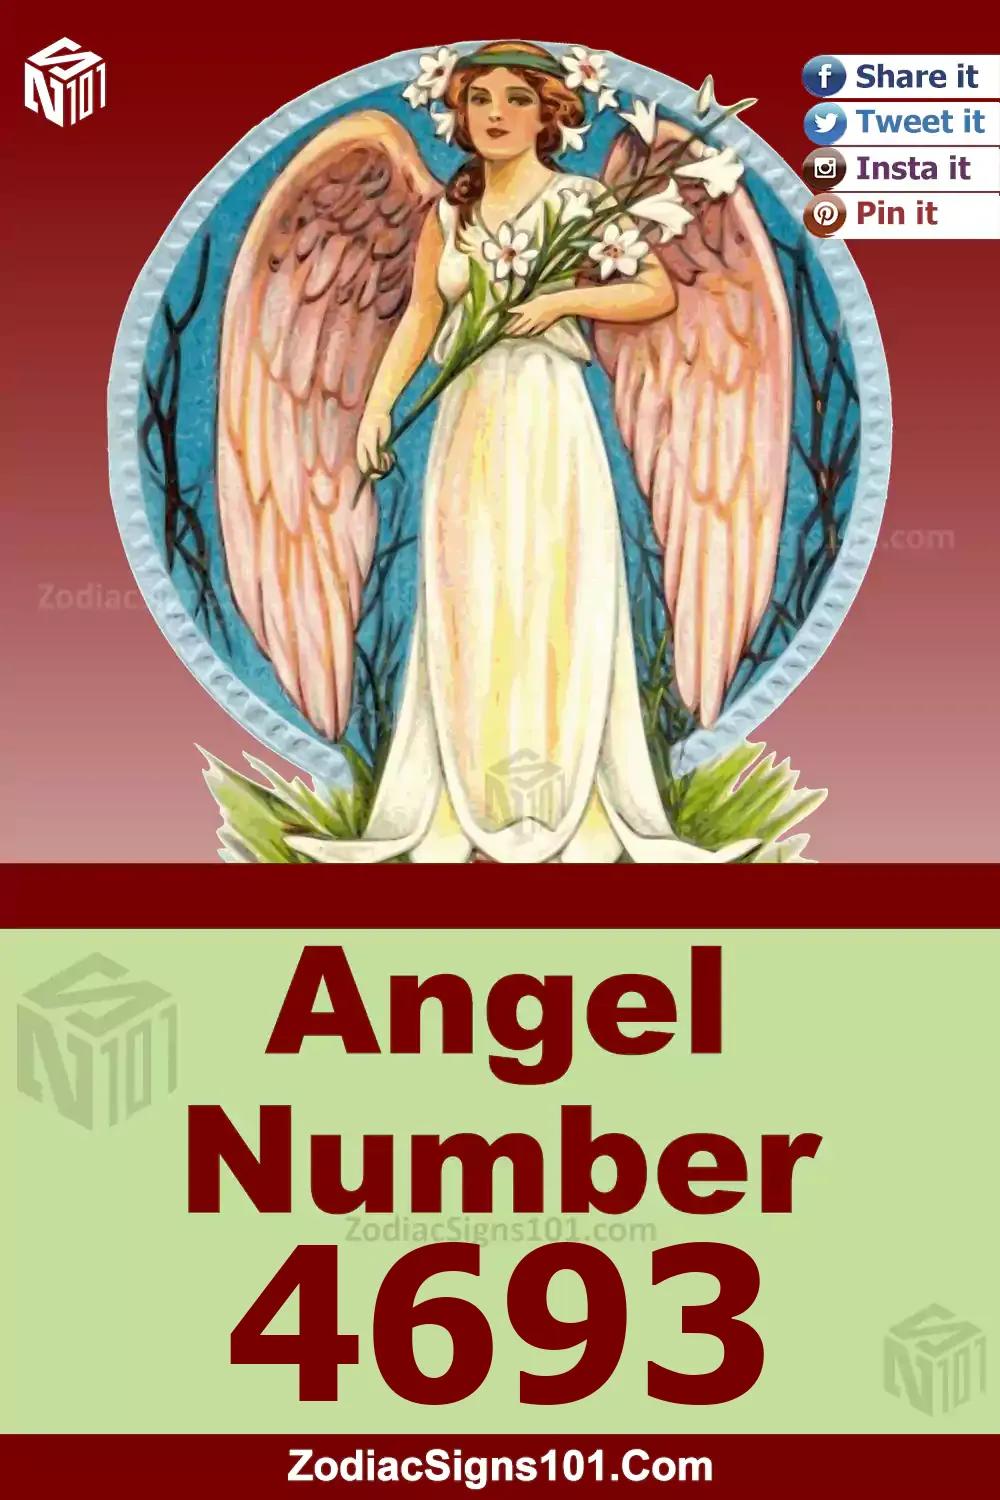 4693-Angel-Number-Meaning.jpg